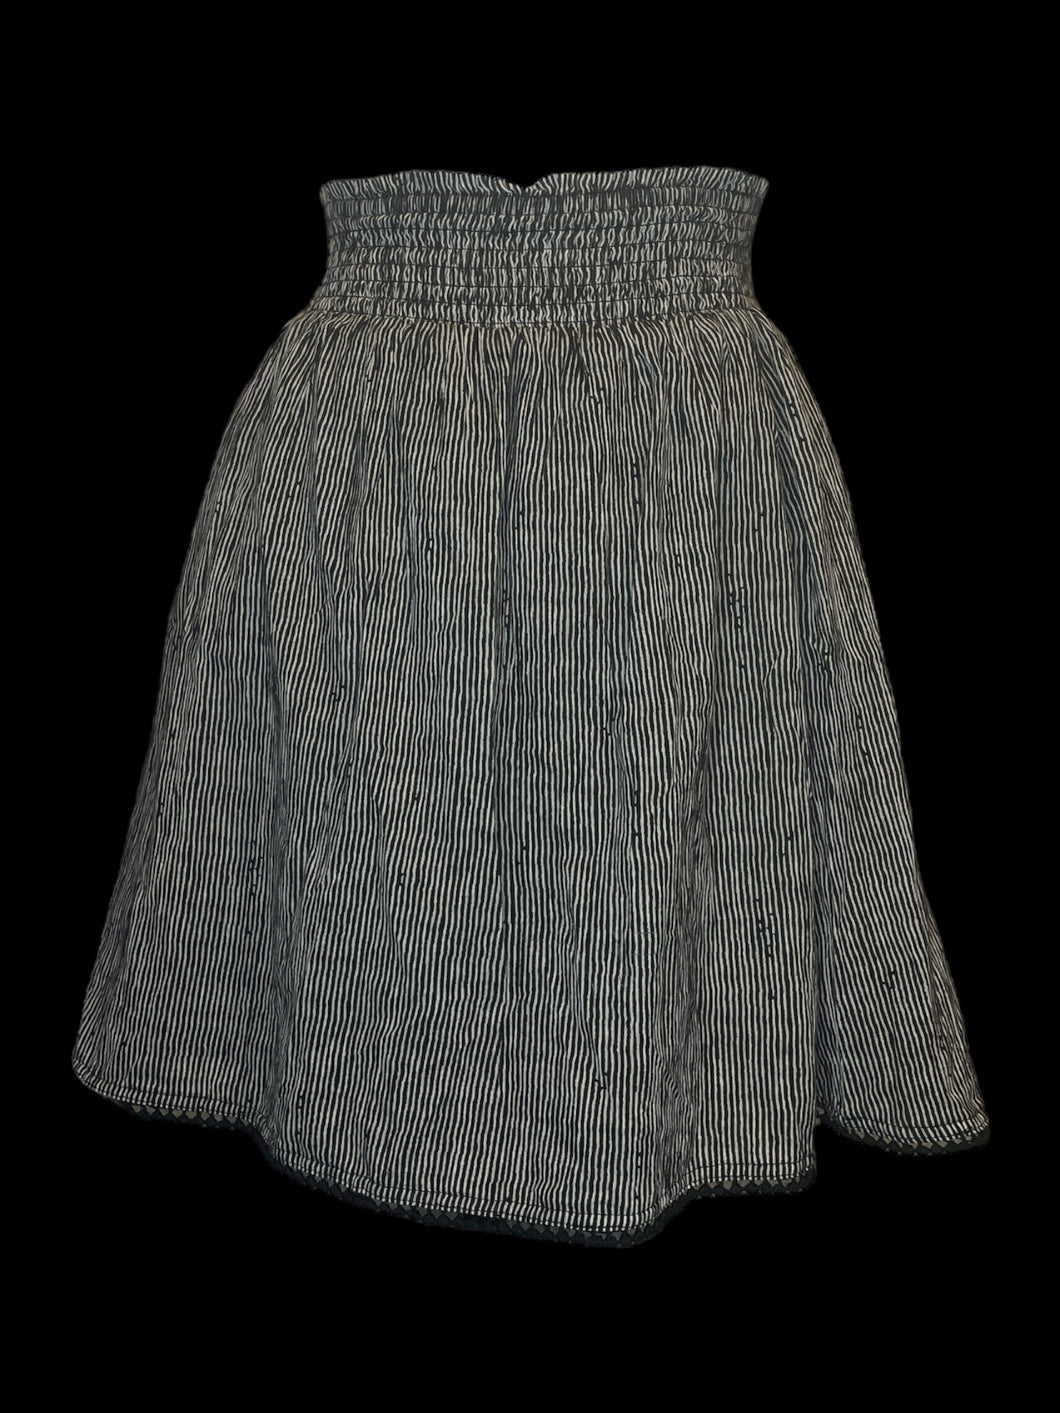 0X Black & white stripe skirt w/ rounded trim, & shirred waist